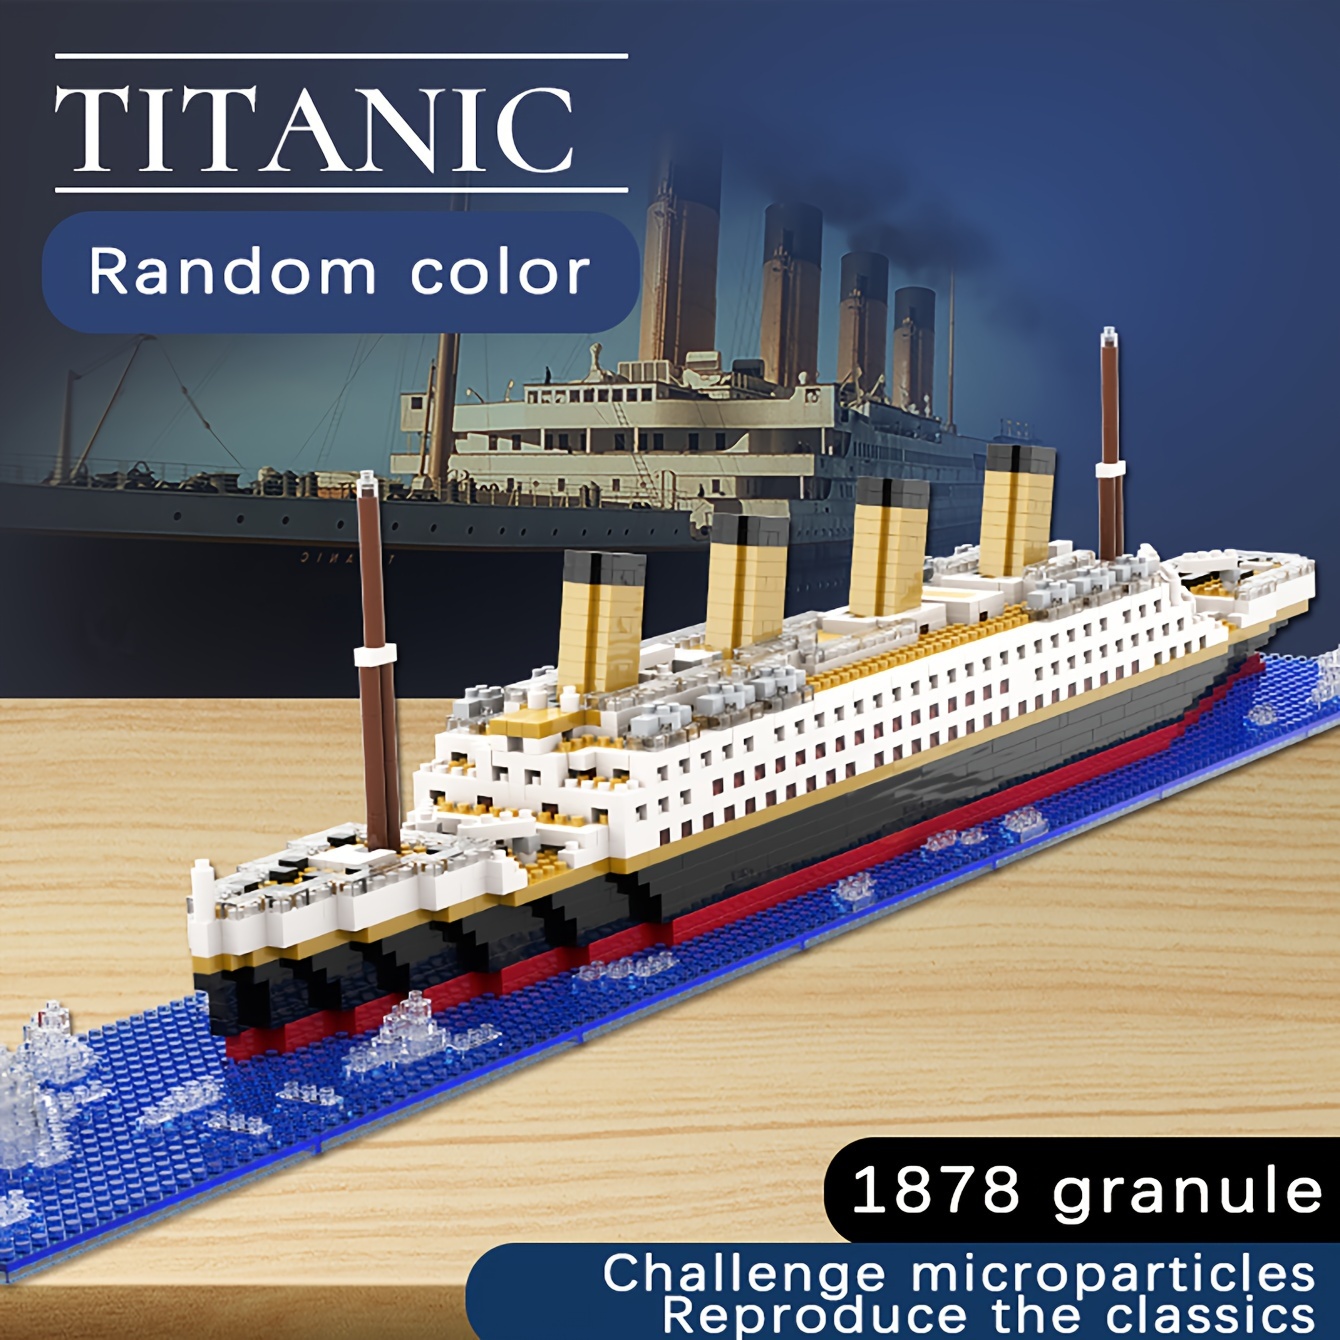 Cubicfun 3D Puzzles for Adults LED Titanic 35'' Large Ship Model